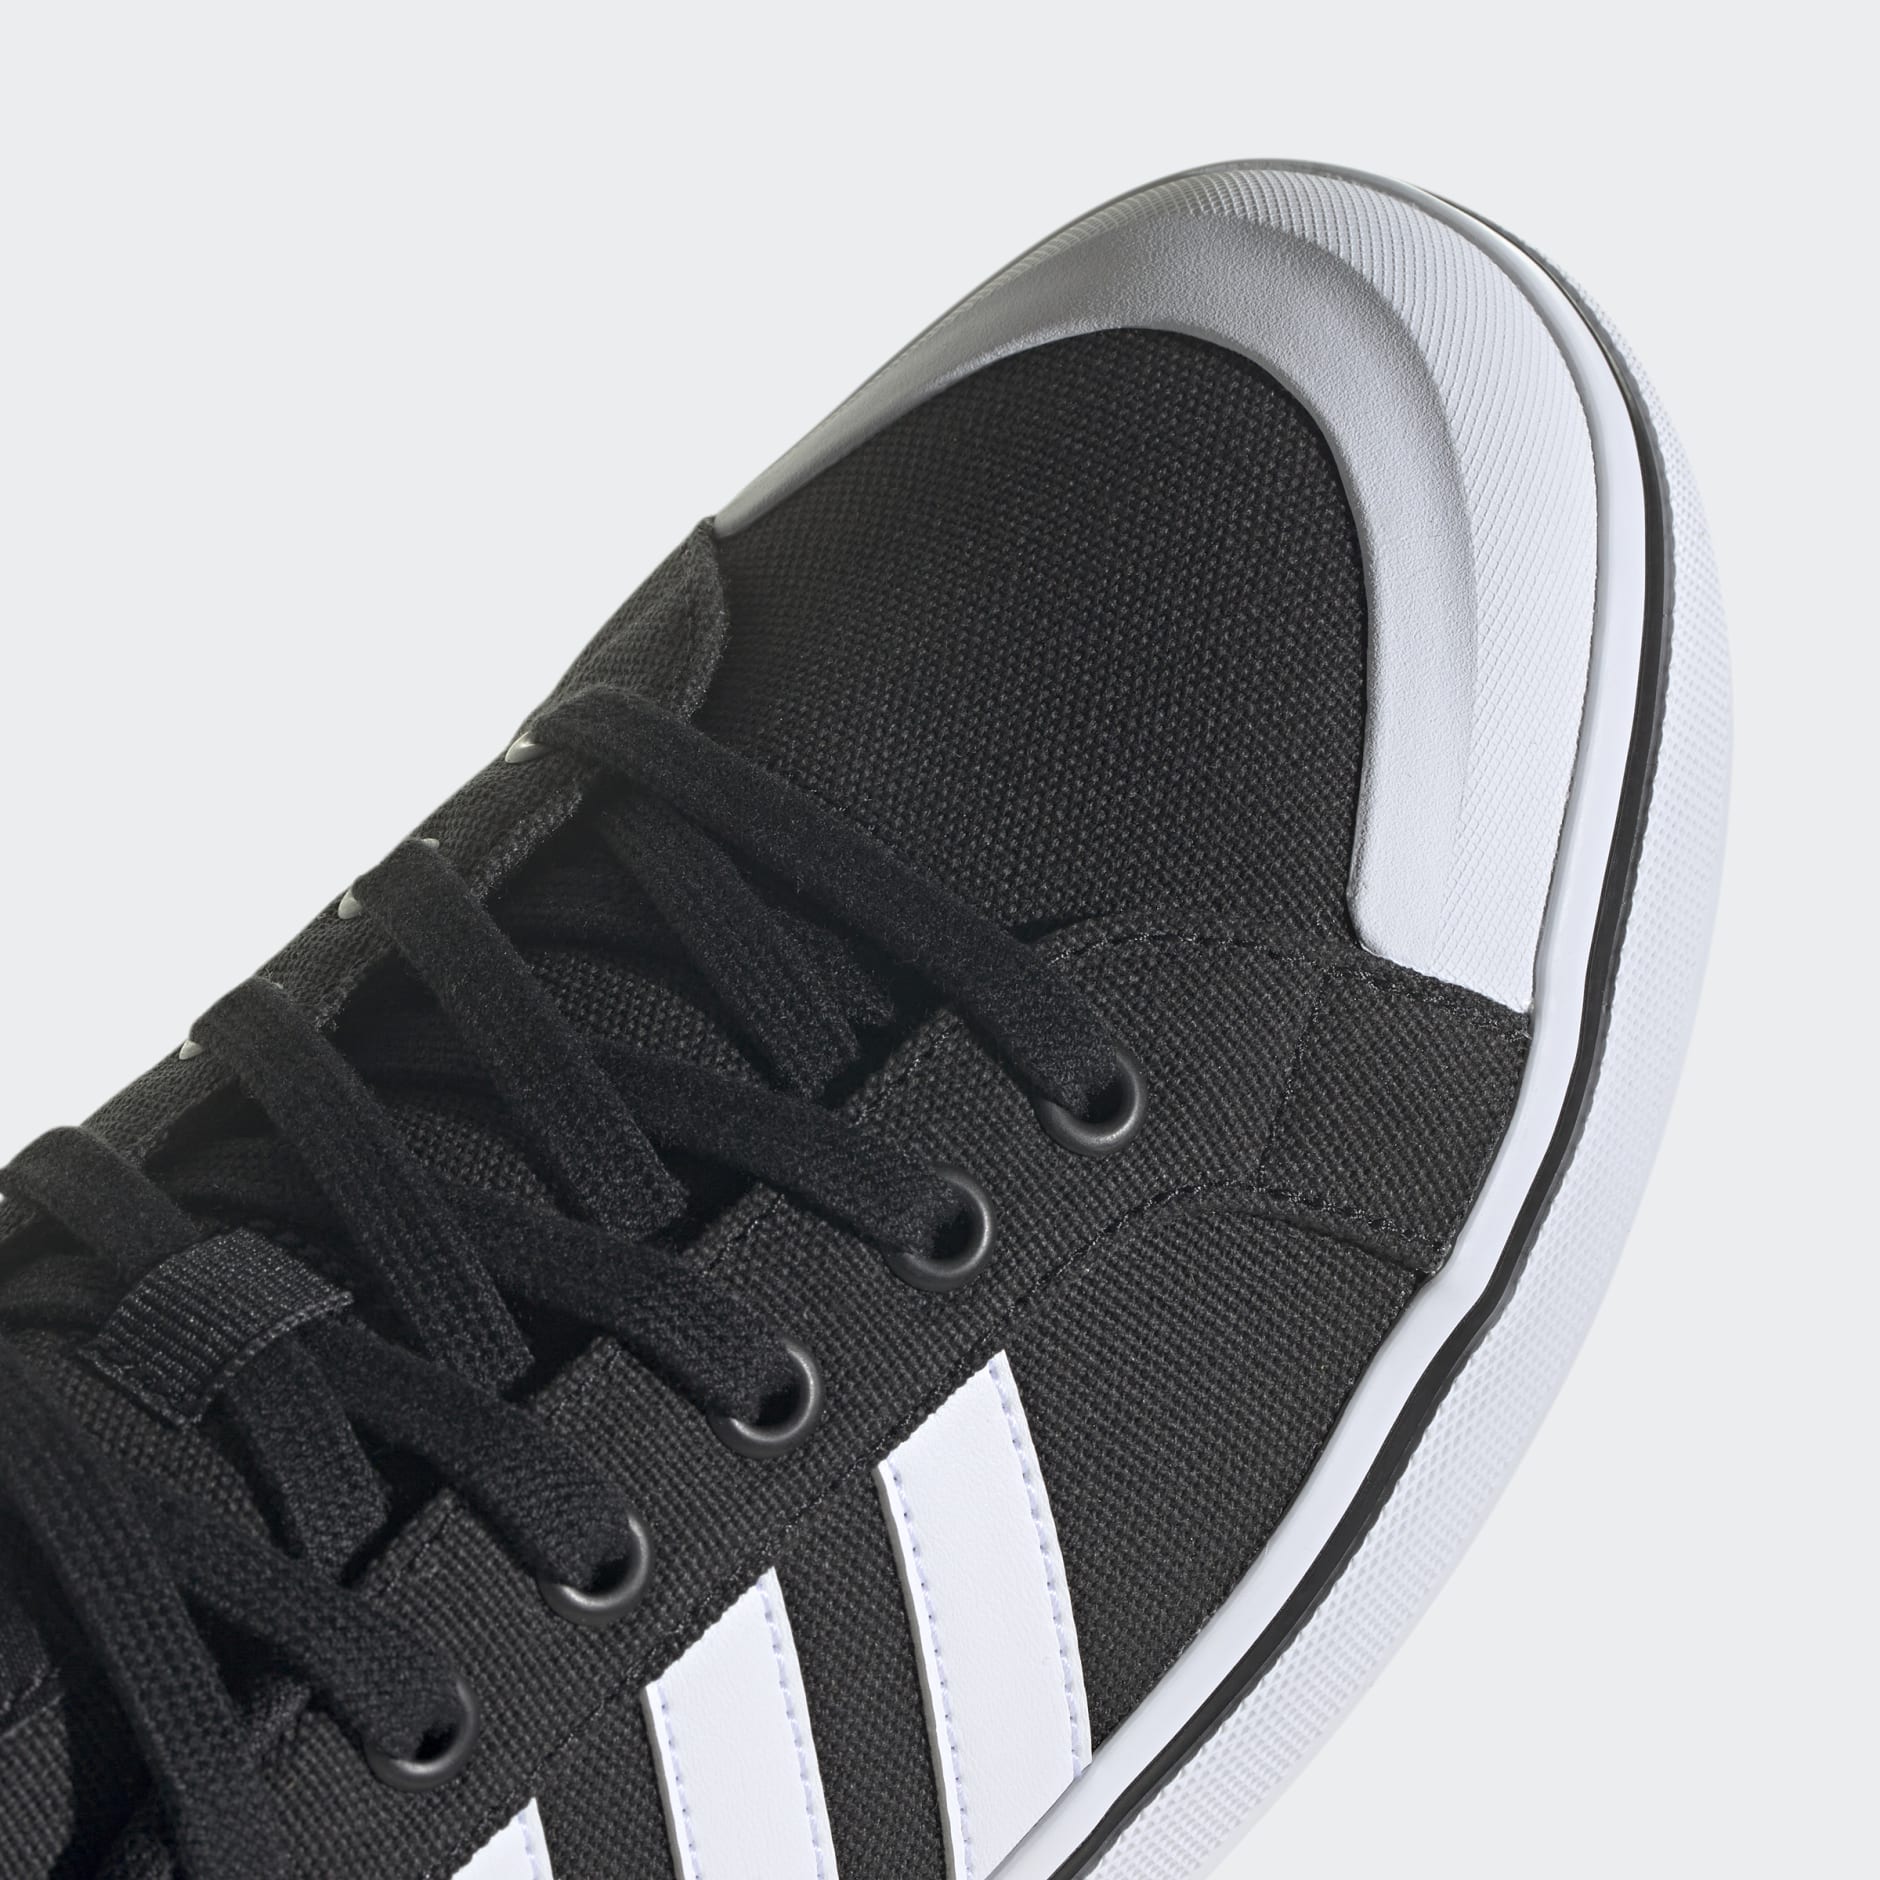 adidas Bravada 2.0 Lifestyle Skateboarding Canvas Shoes - Black ...